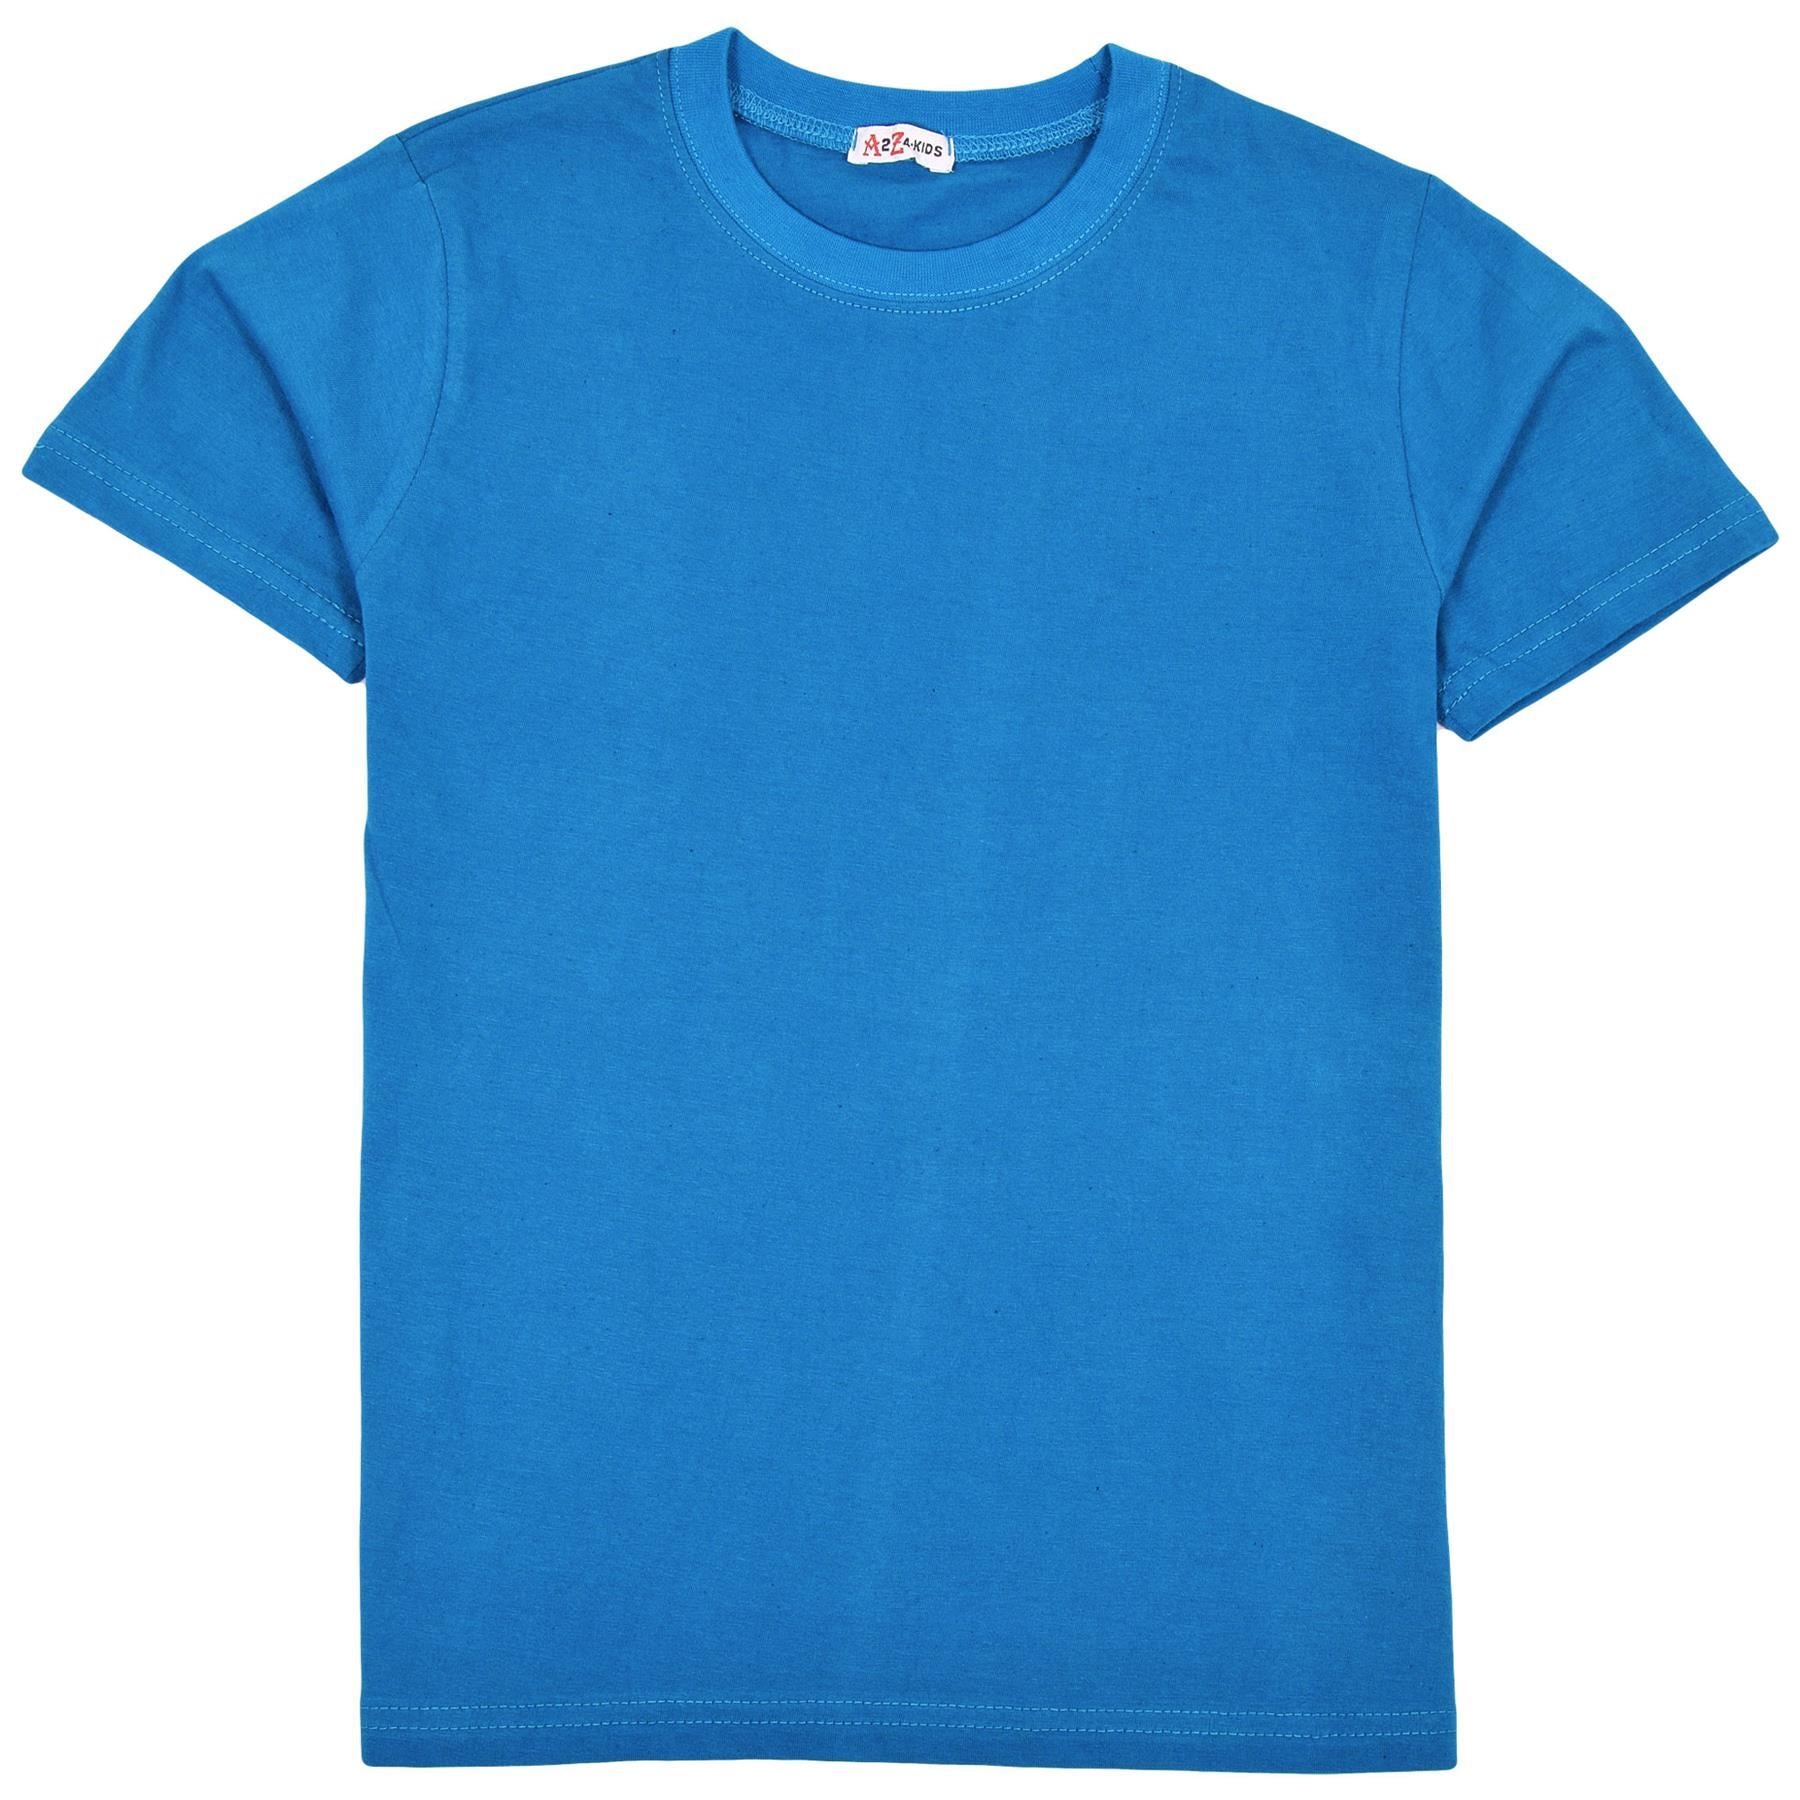 Boys Plain Soft Feel Summer T Shirt Top